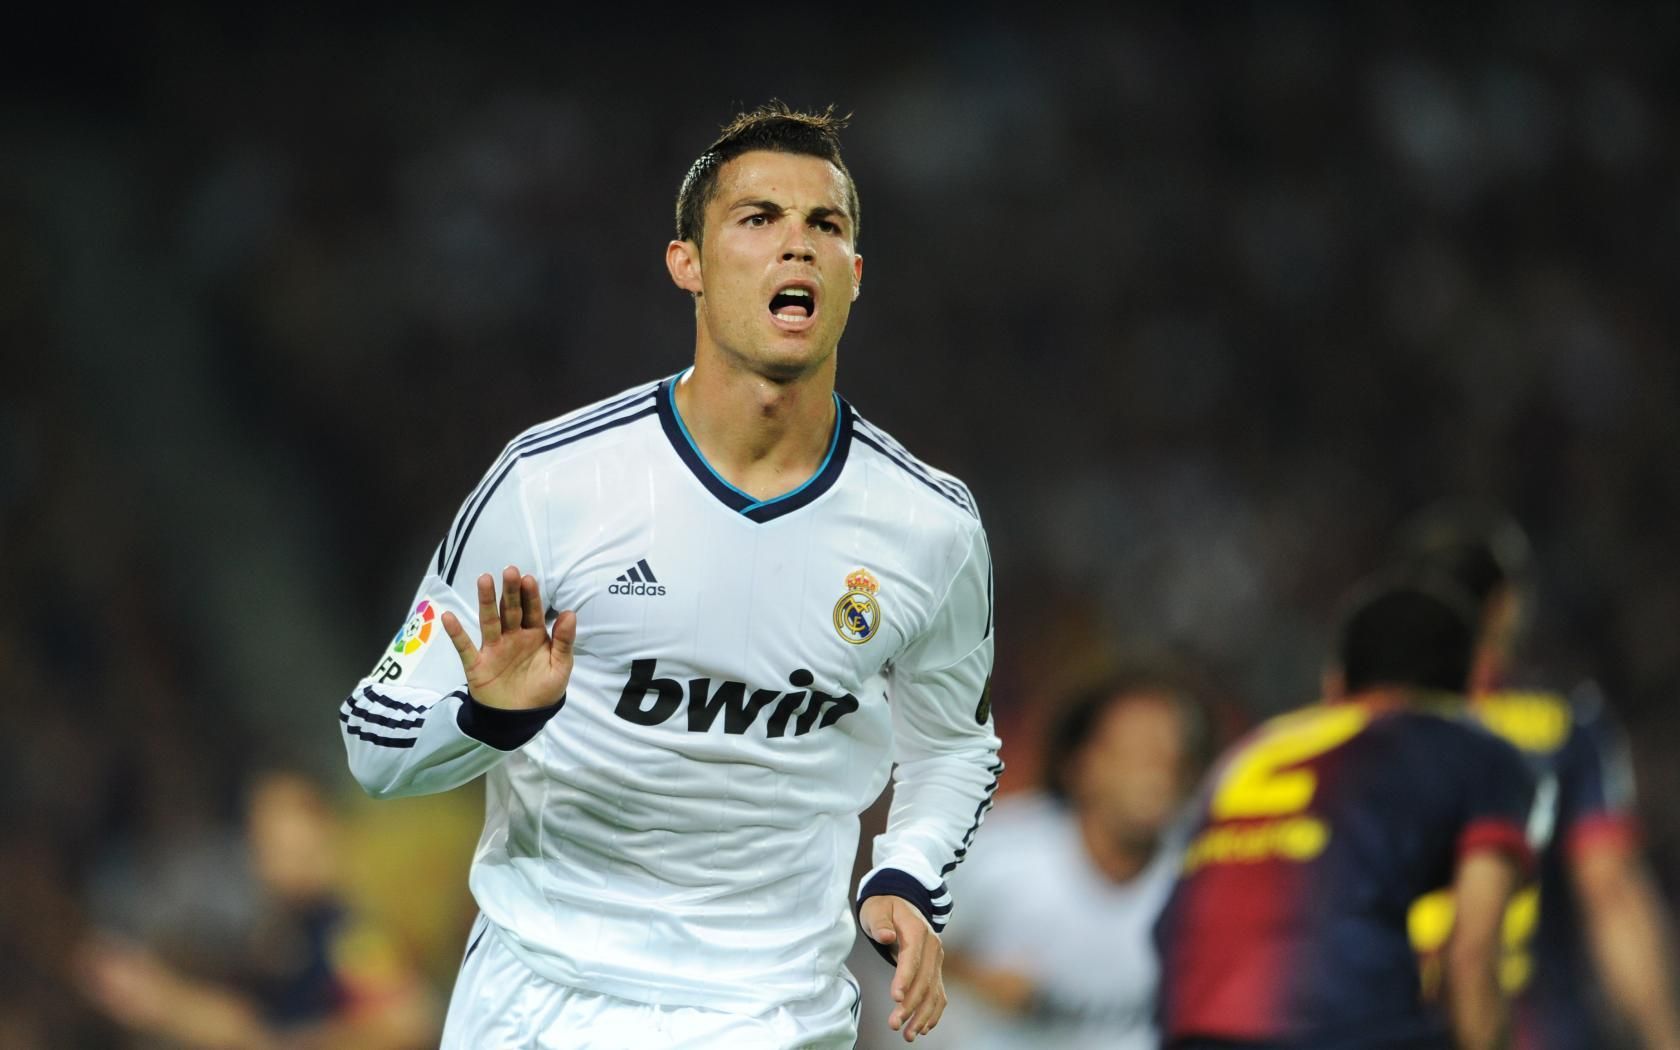 Cristiano Ronaldo, Real Madrid, El Classico, goal, celebration